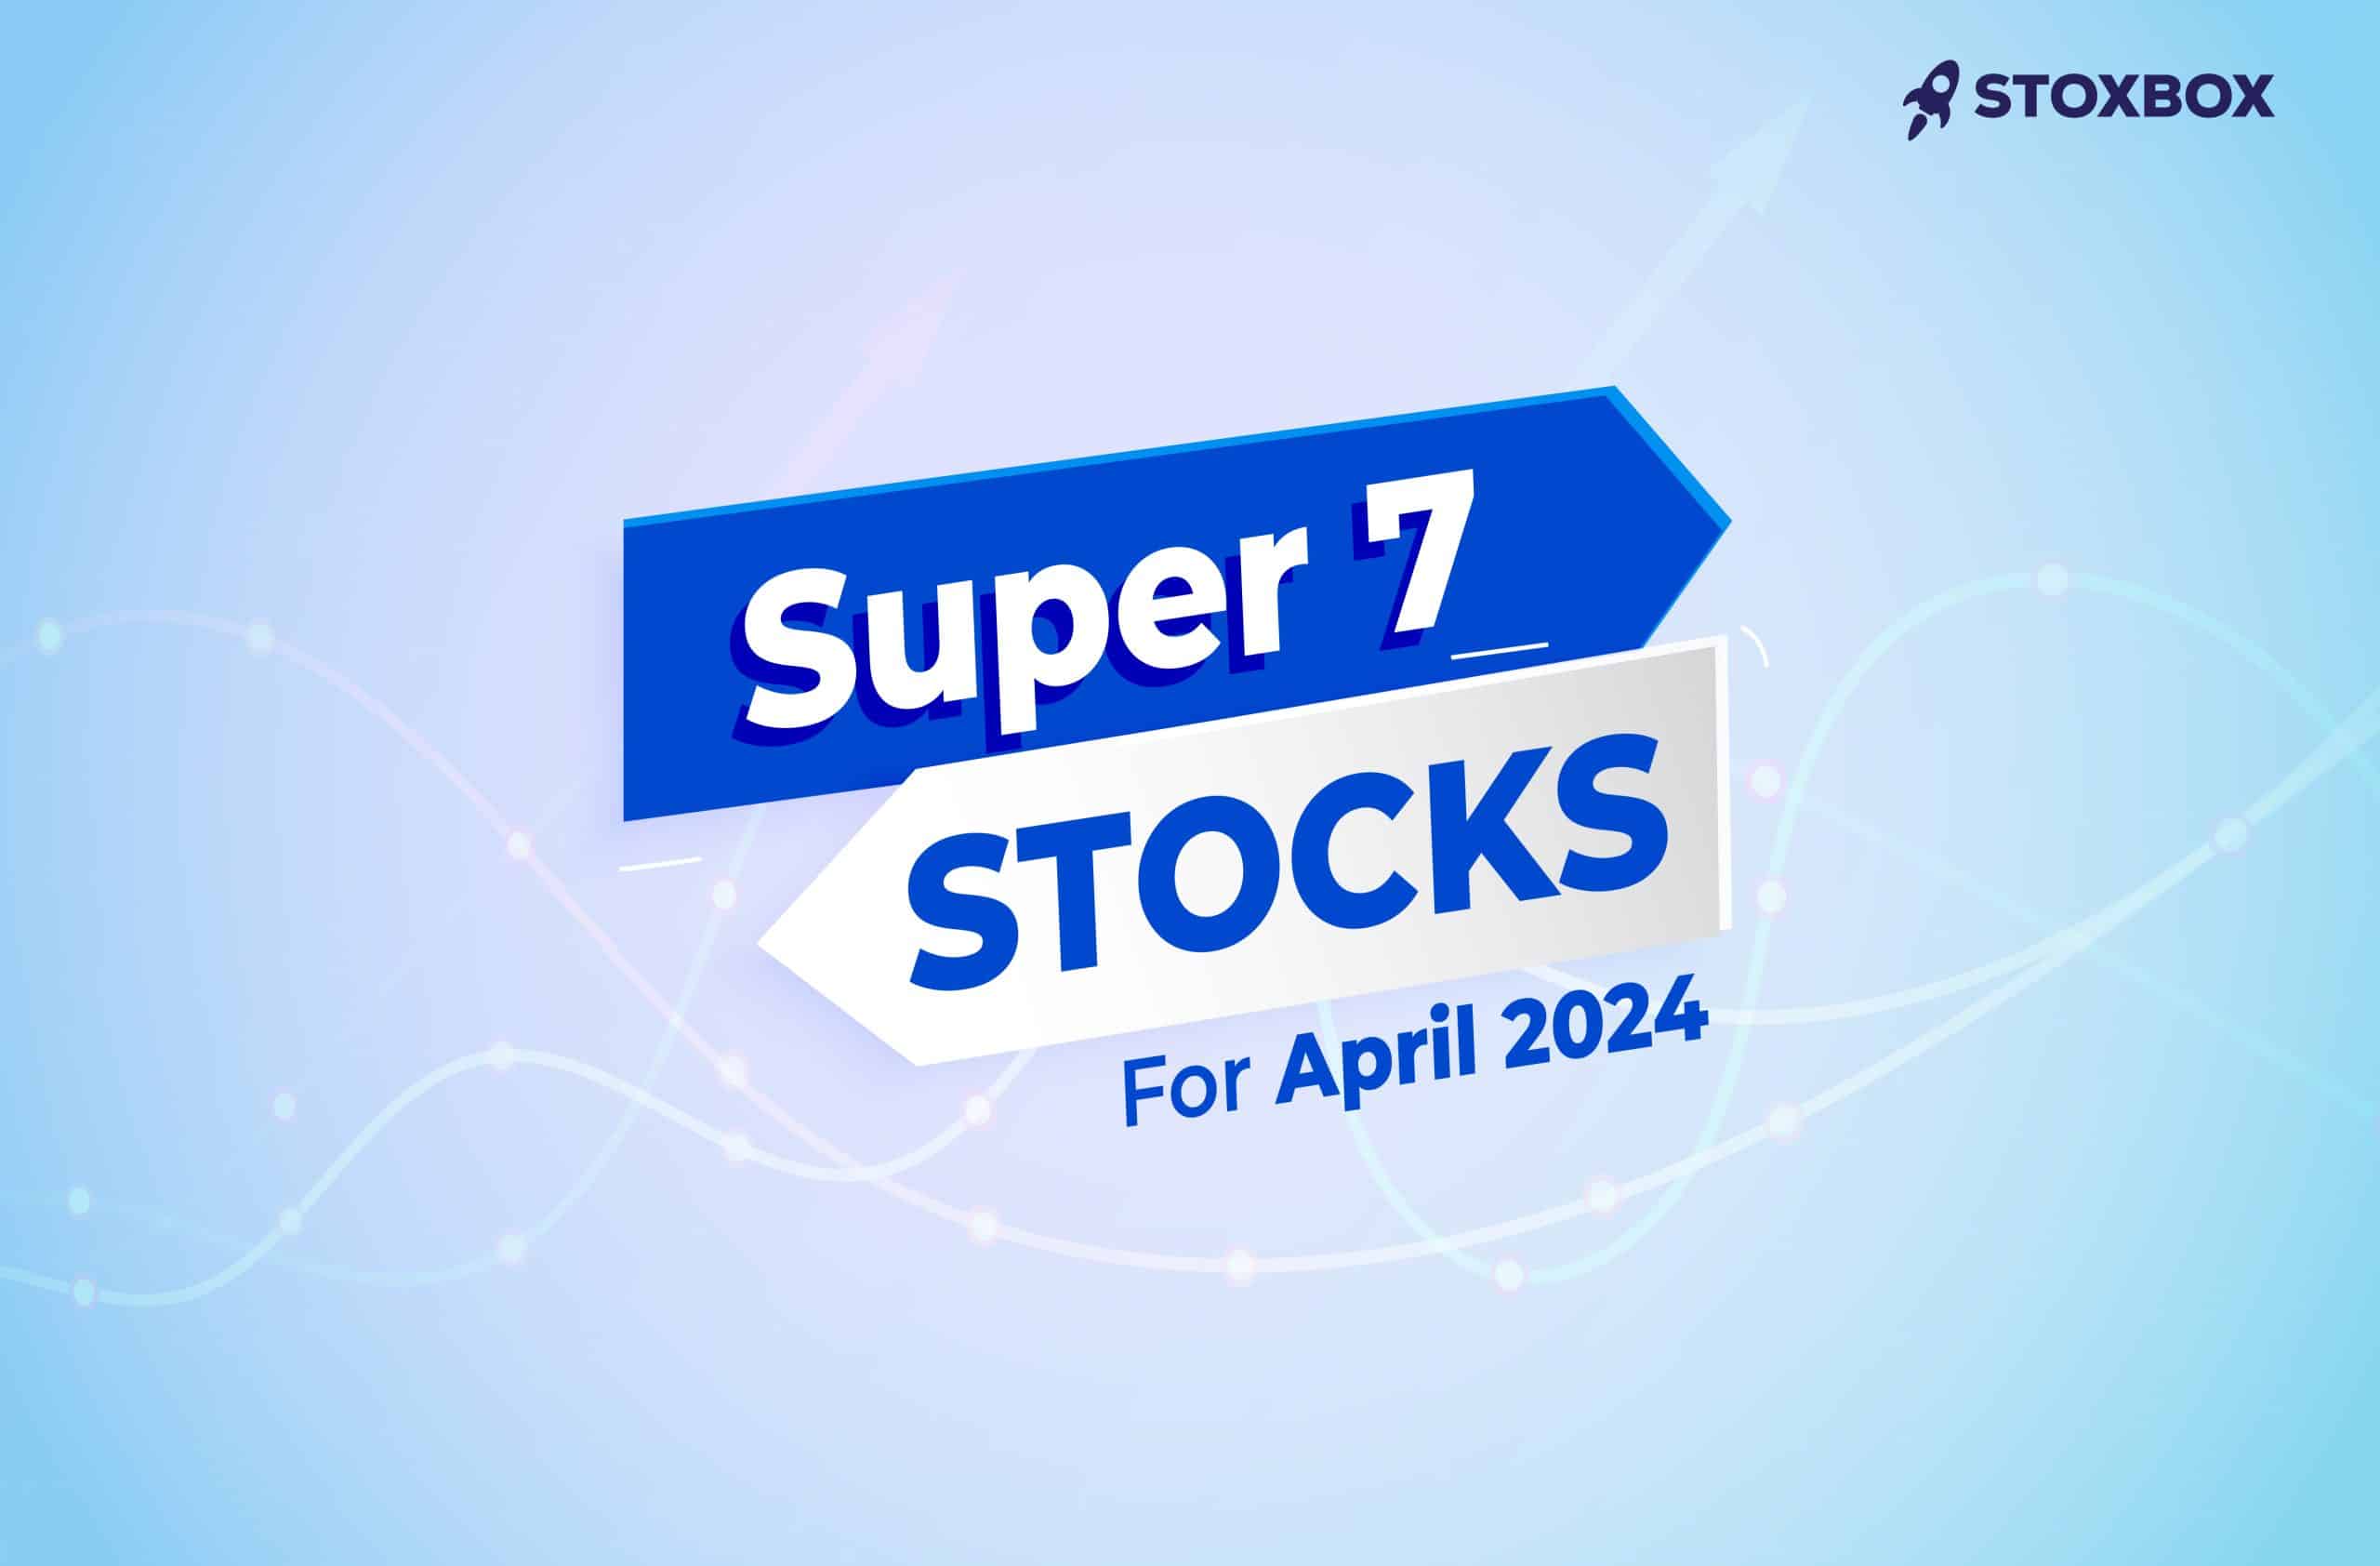 Super 7 stocks for April 2024